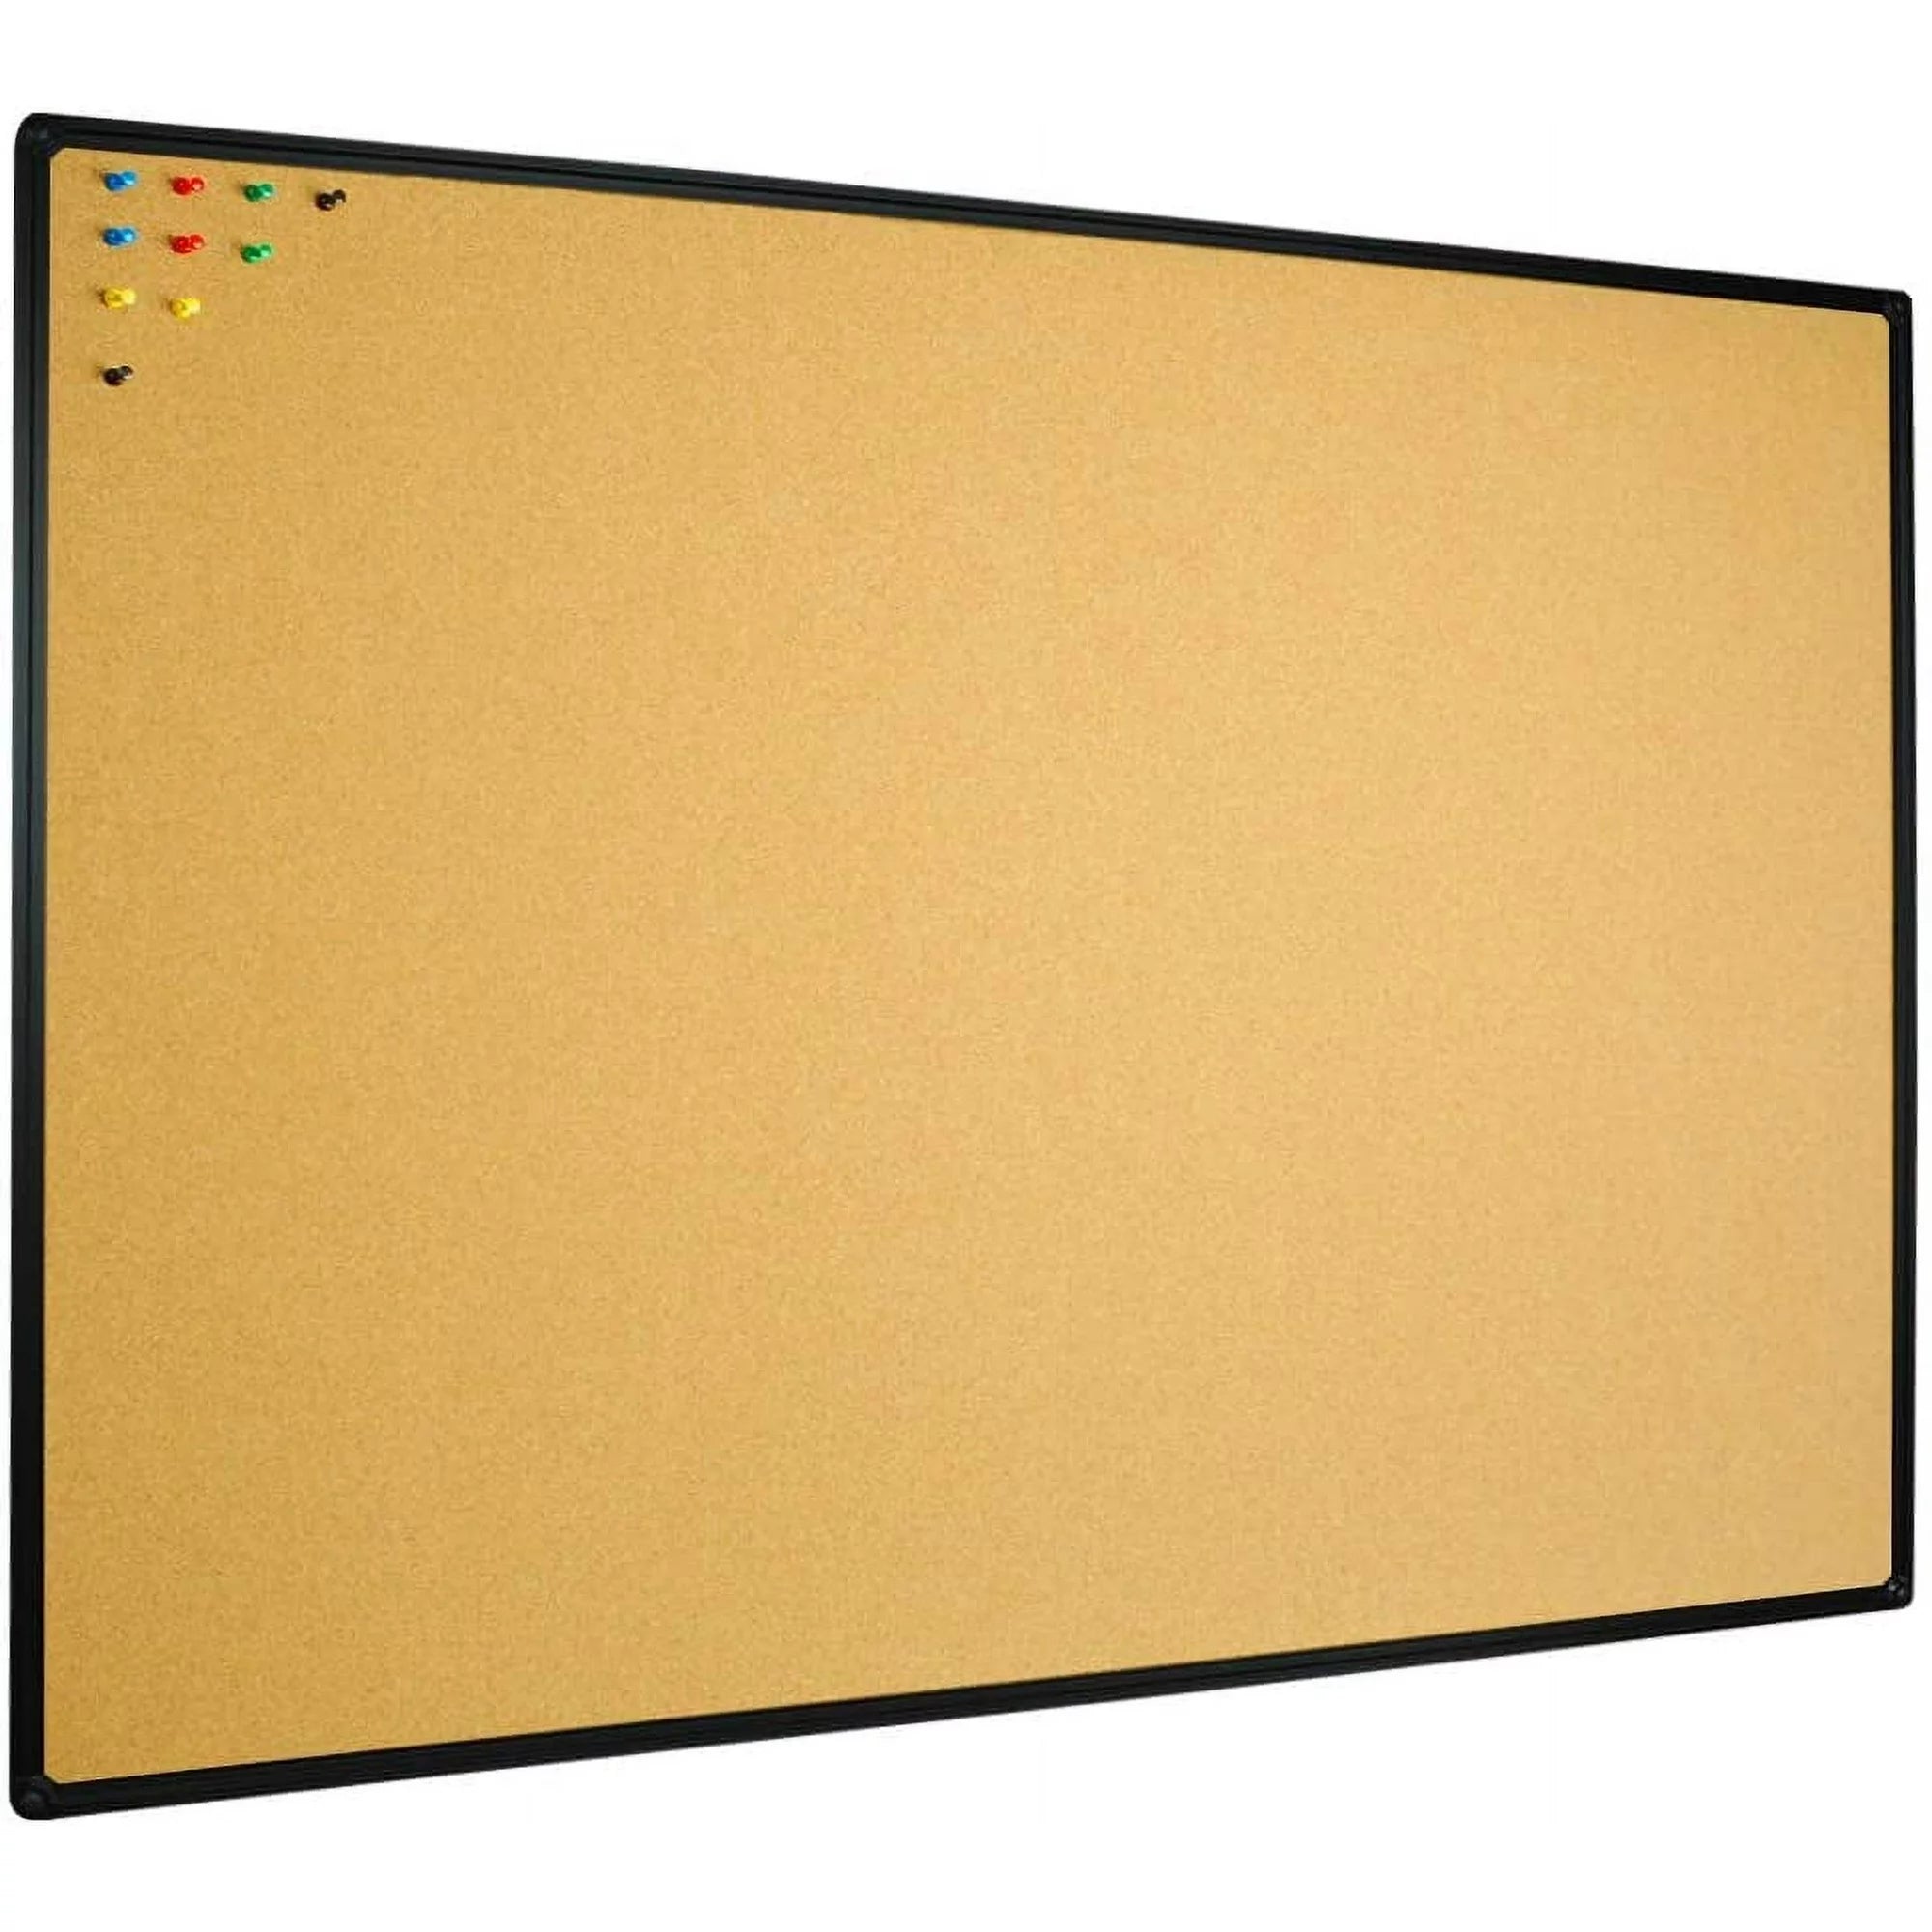 Organize with a 48x36 Bulletin Board